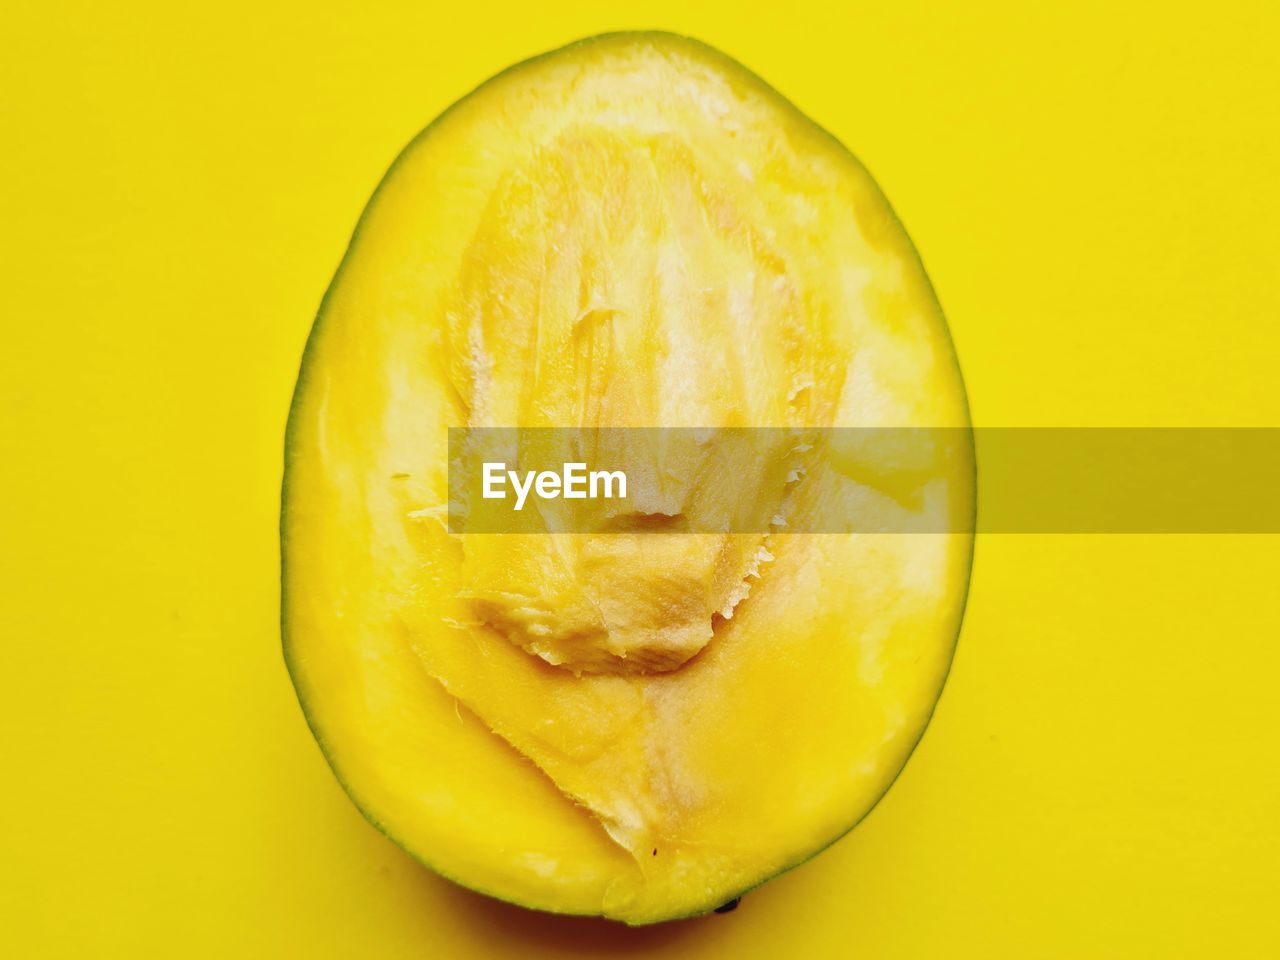 Mango cut in half on yellow background